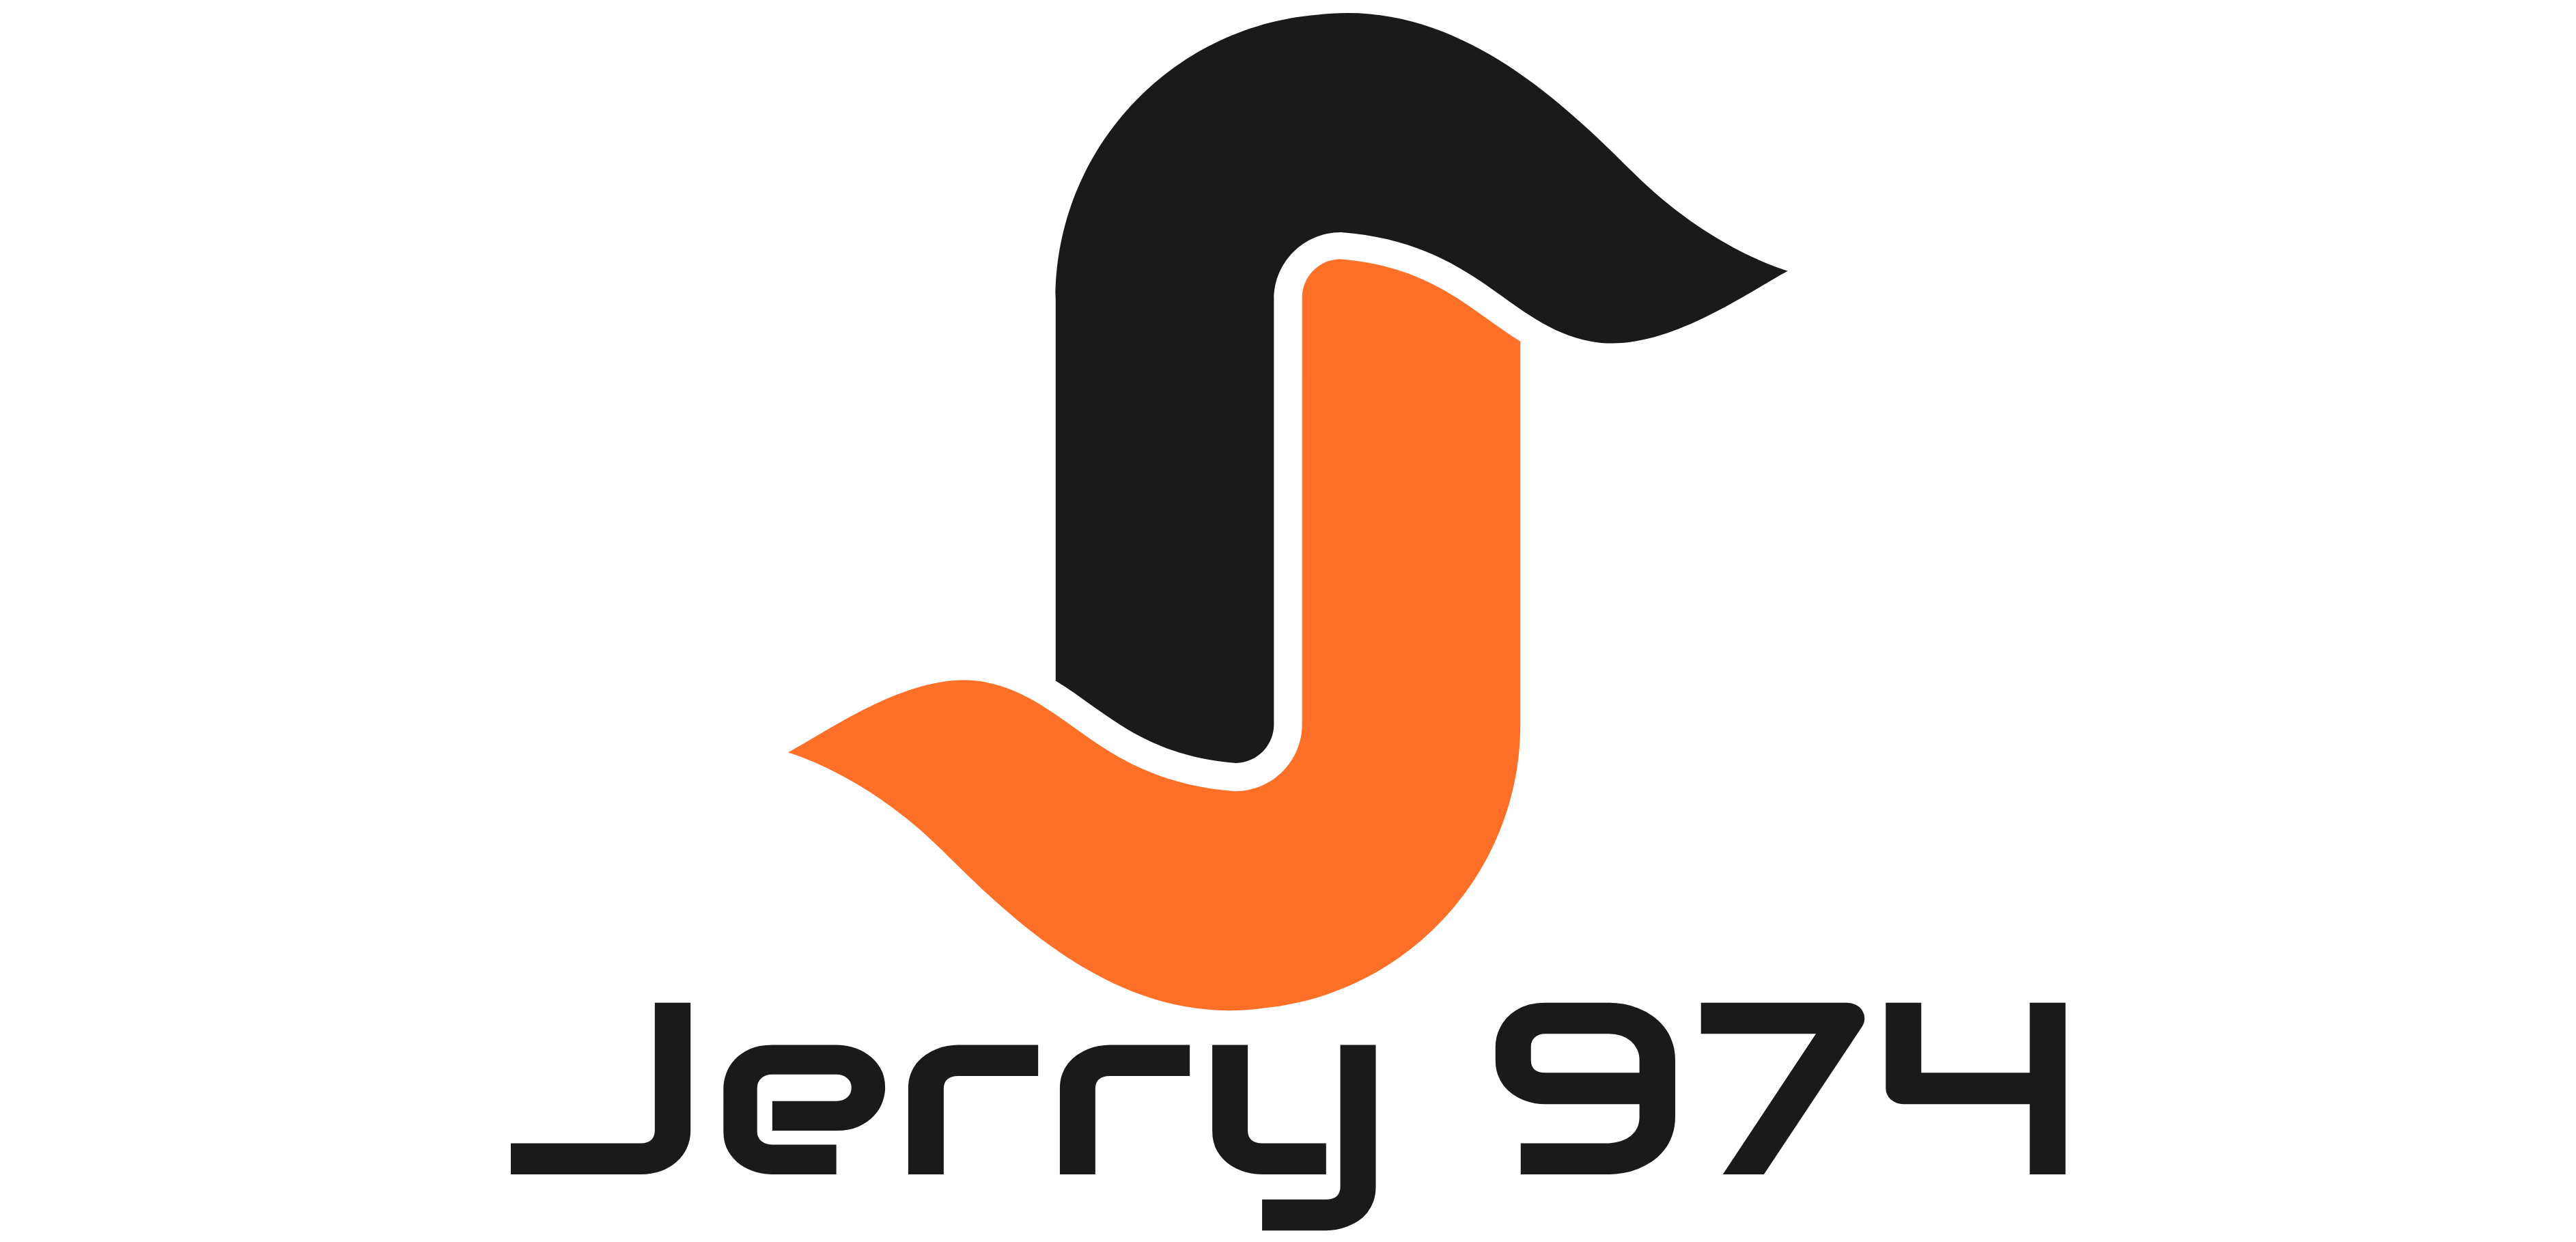 جديد – Jerry974